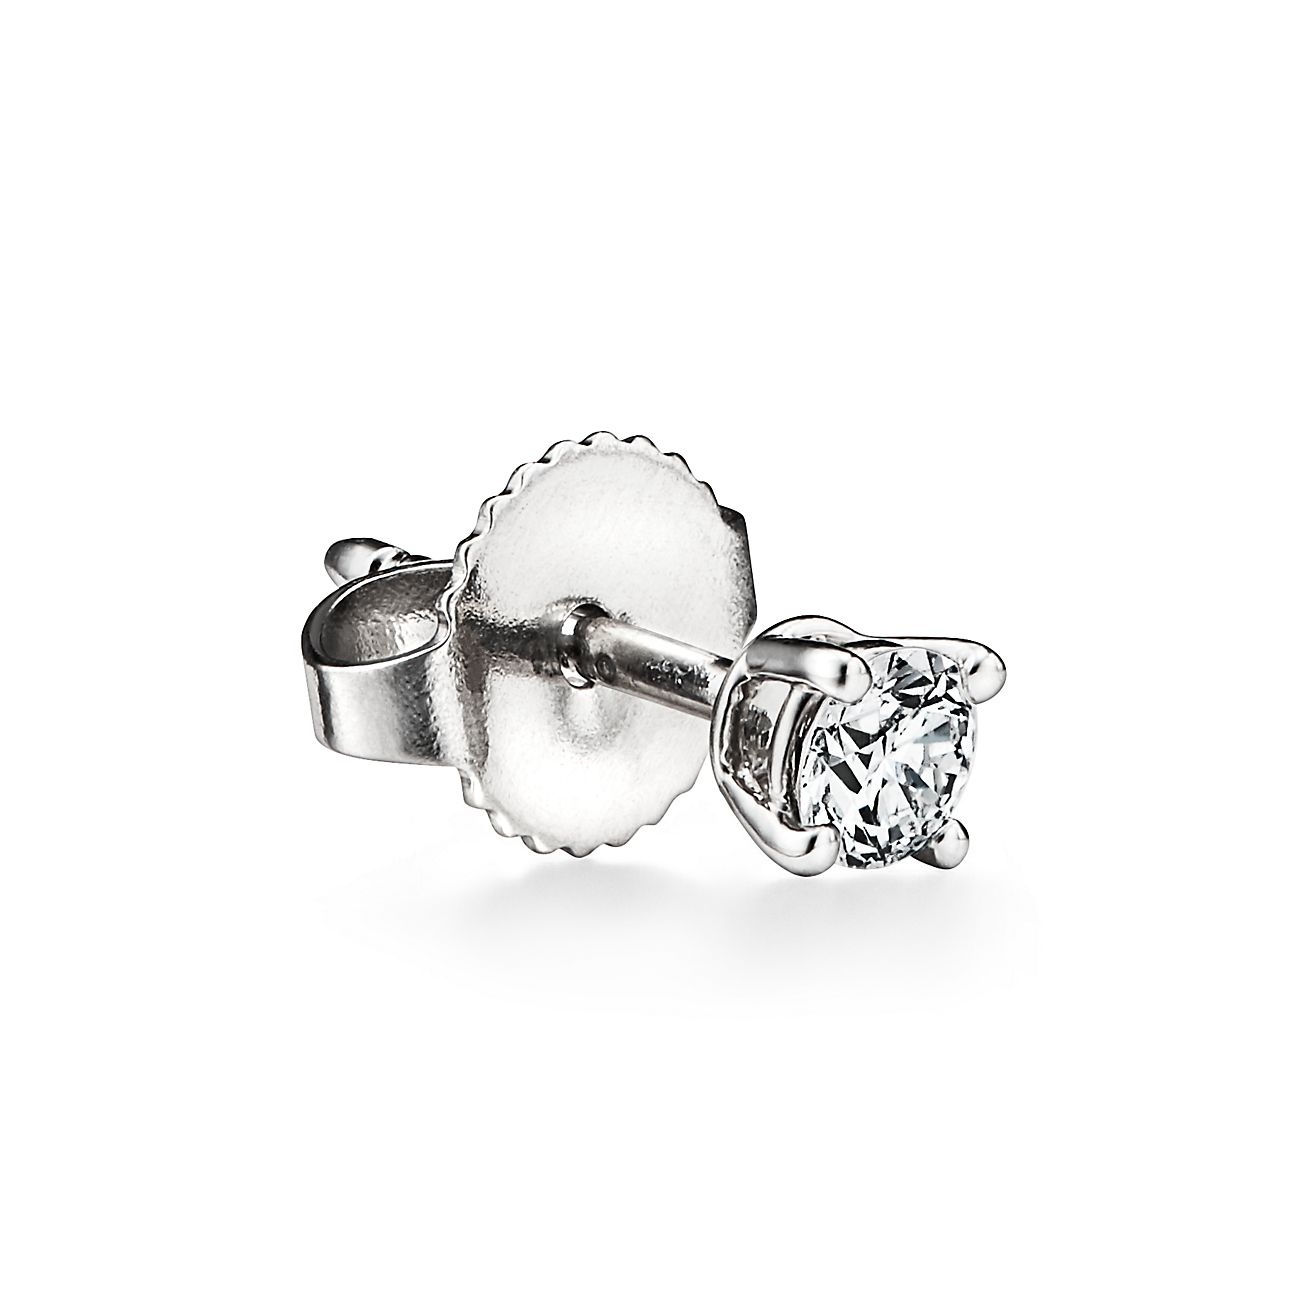 Tiffany Soleste® earrings in platinum with round brilliant diamonds. |  Tiffany & Co.